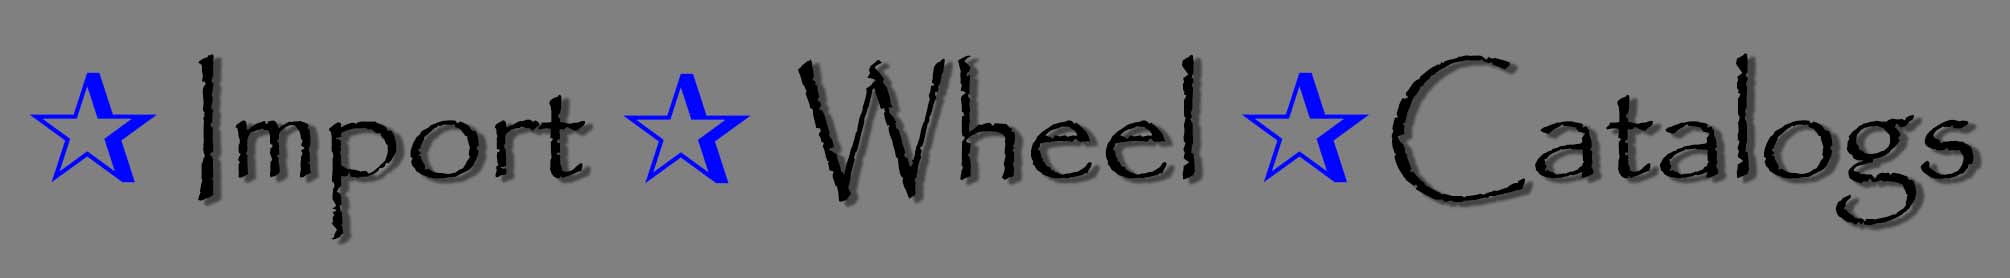 Import Wheel Catalogs